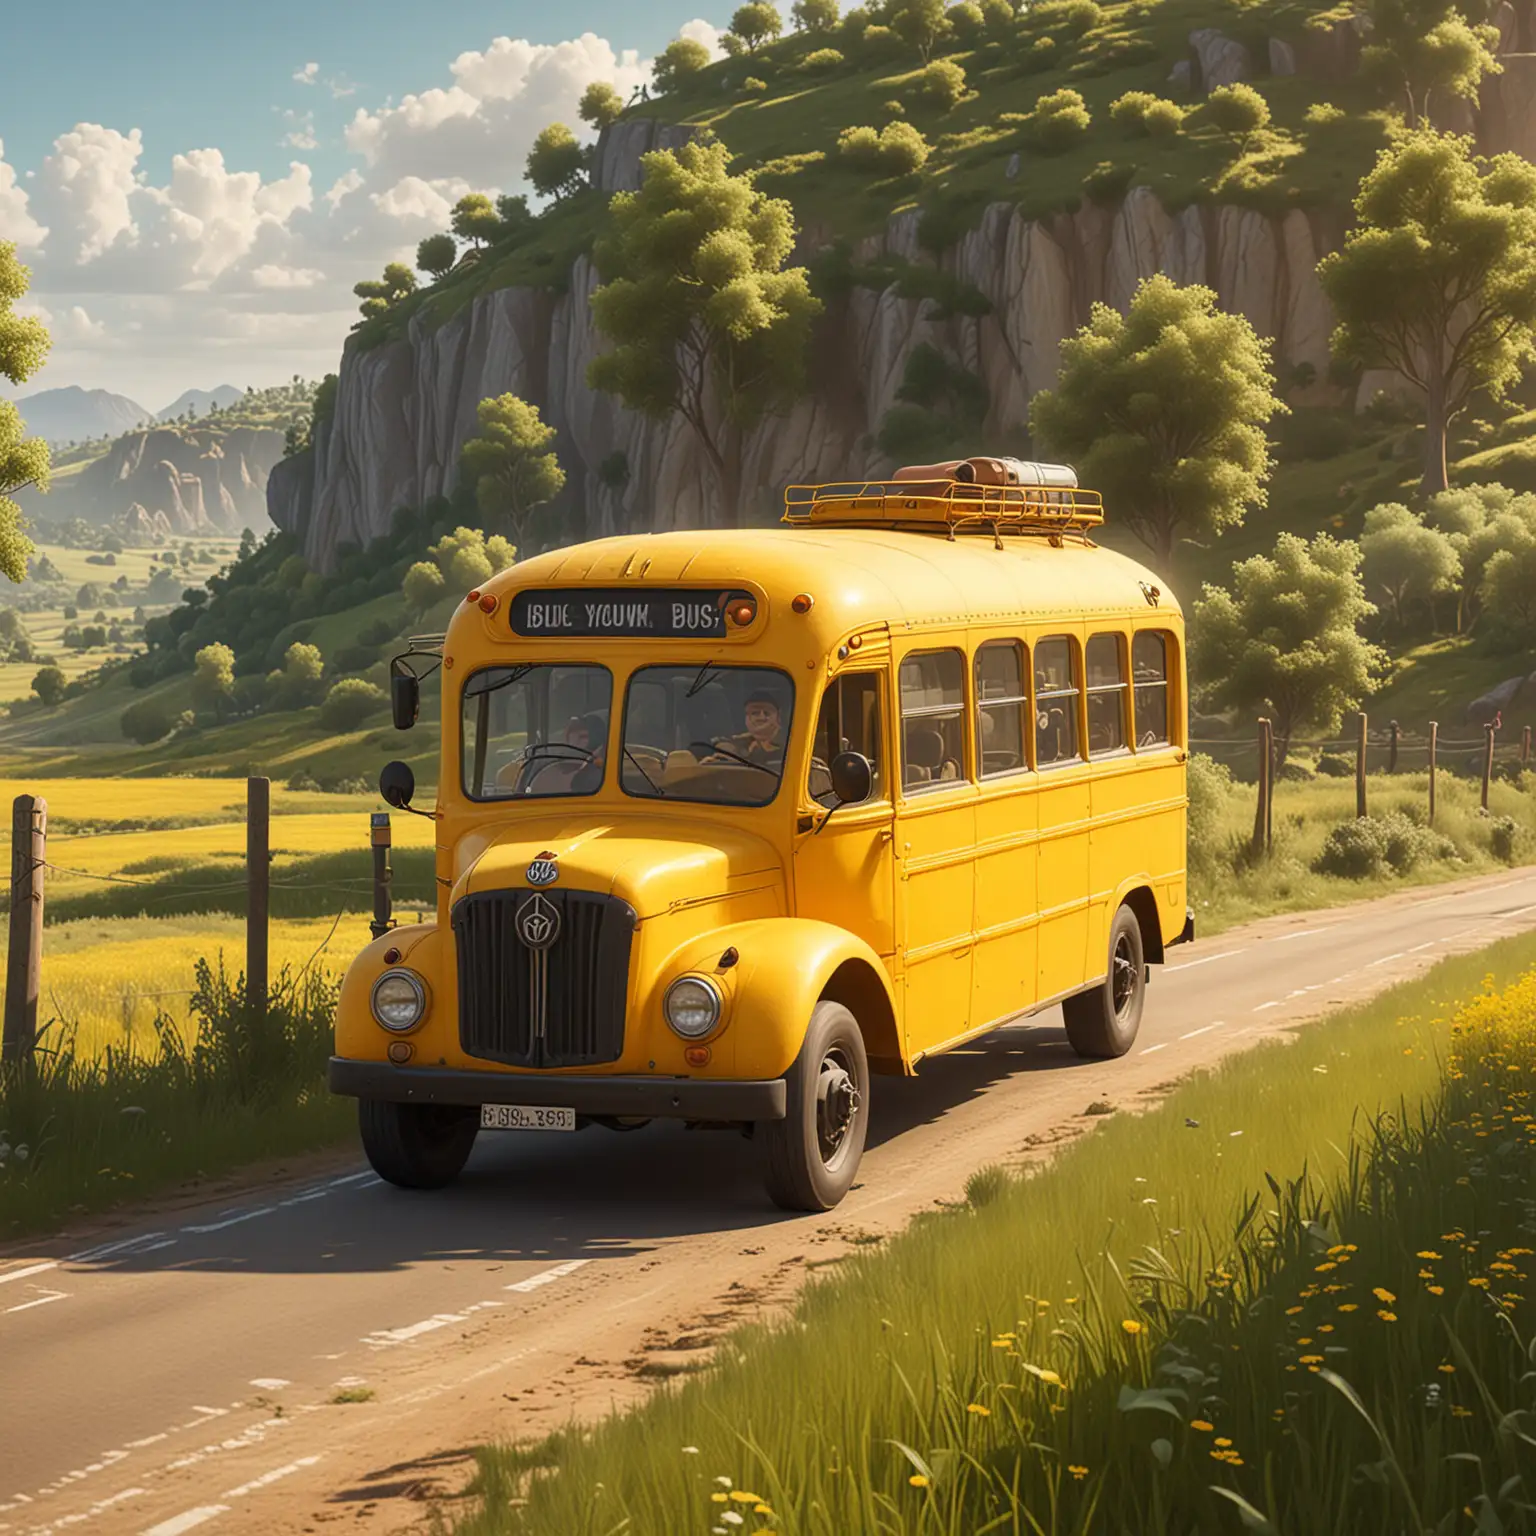 Pixar style big yellow bus driving through  countryside environment 